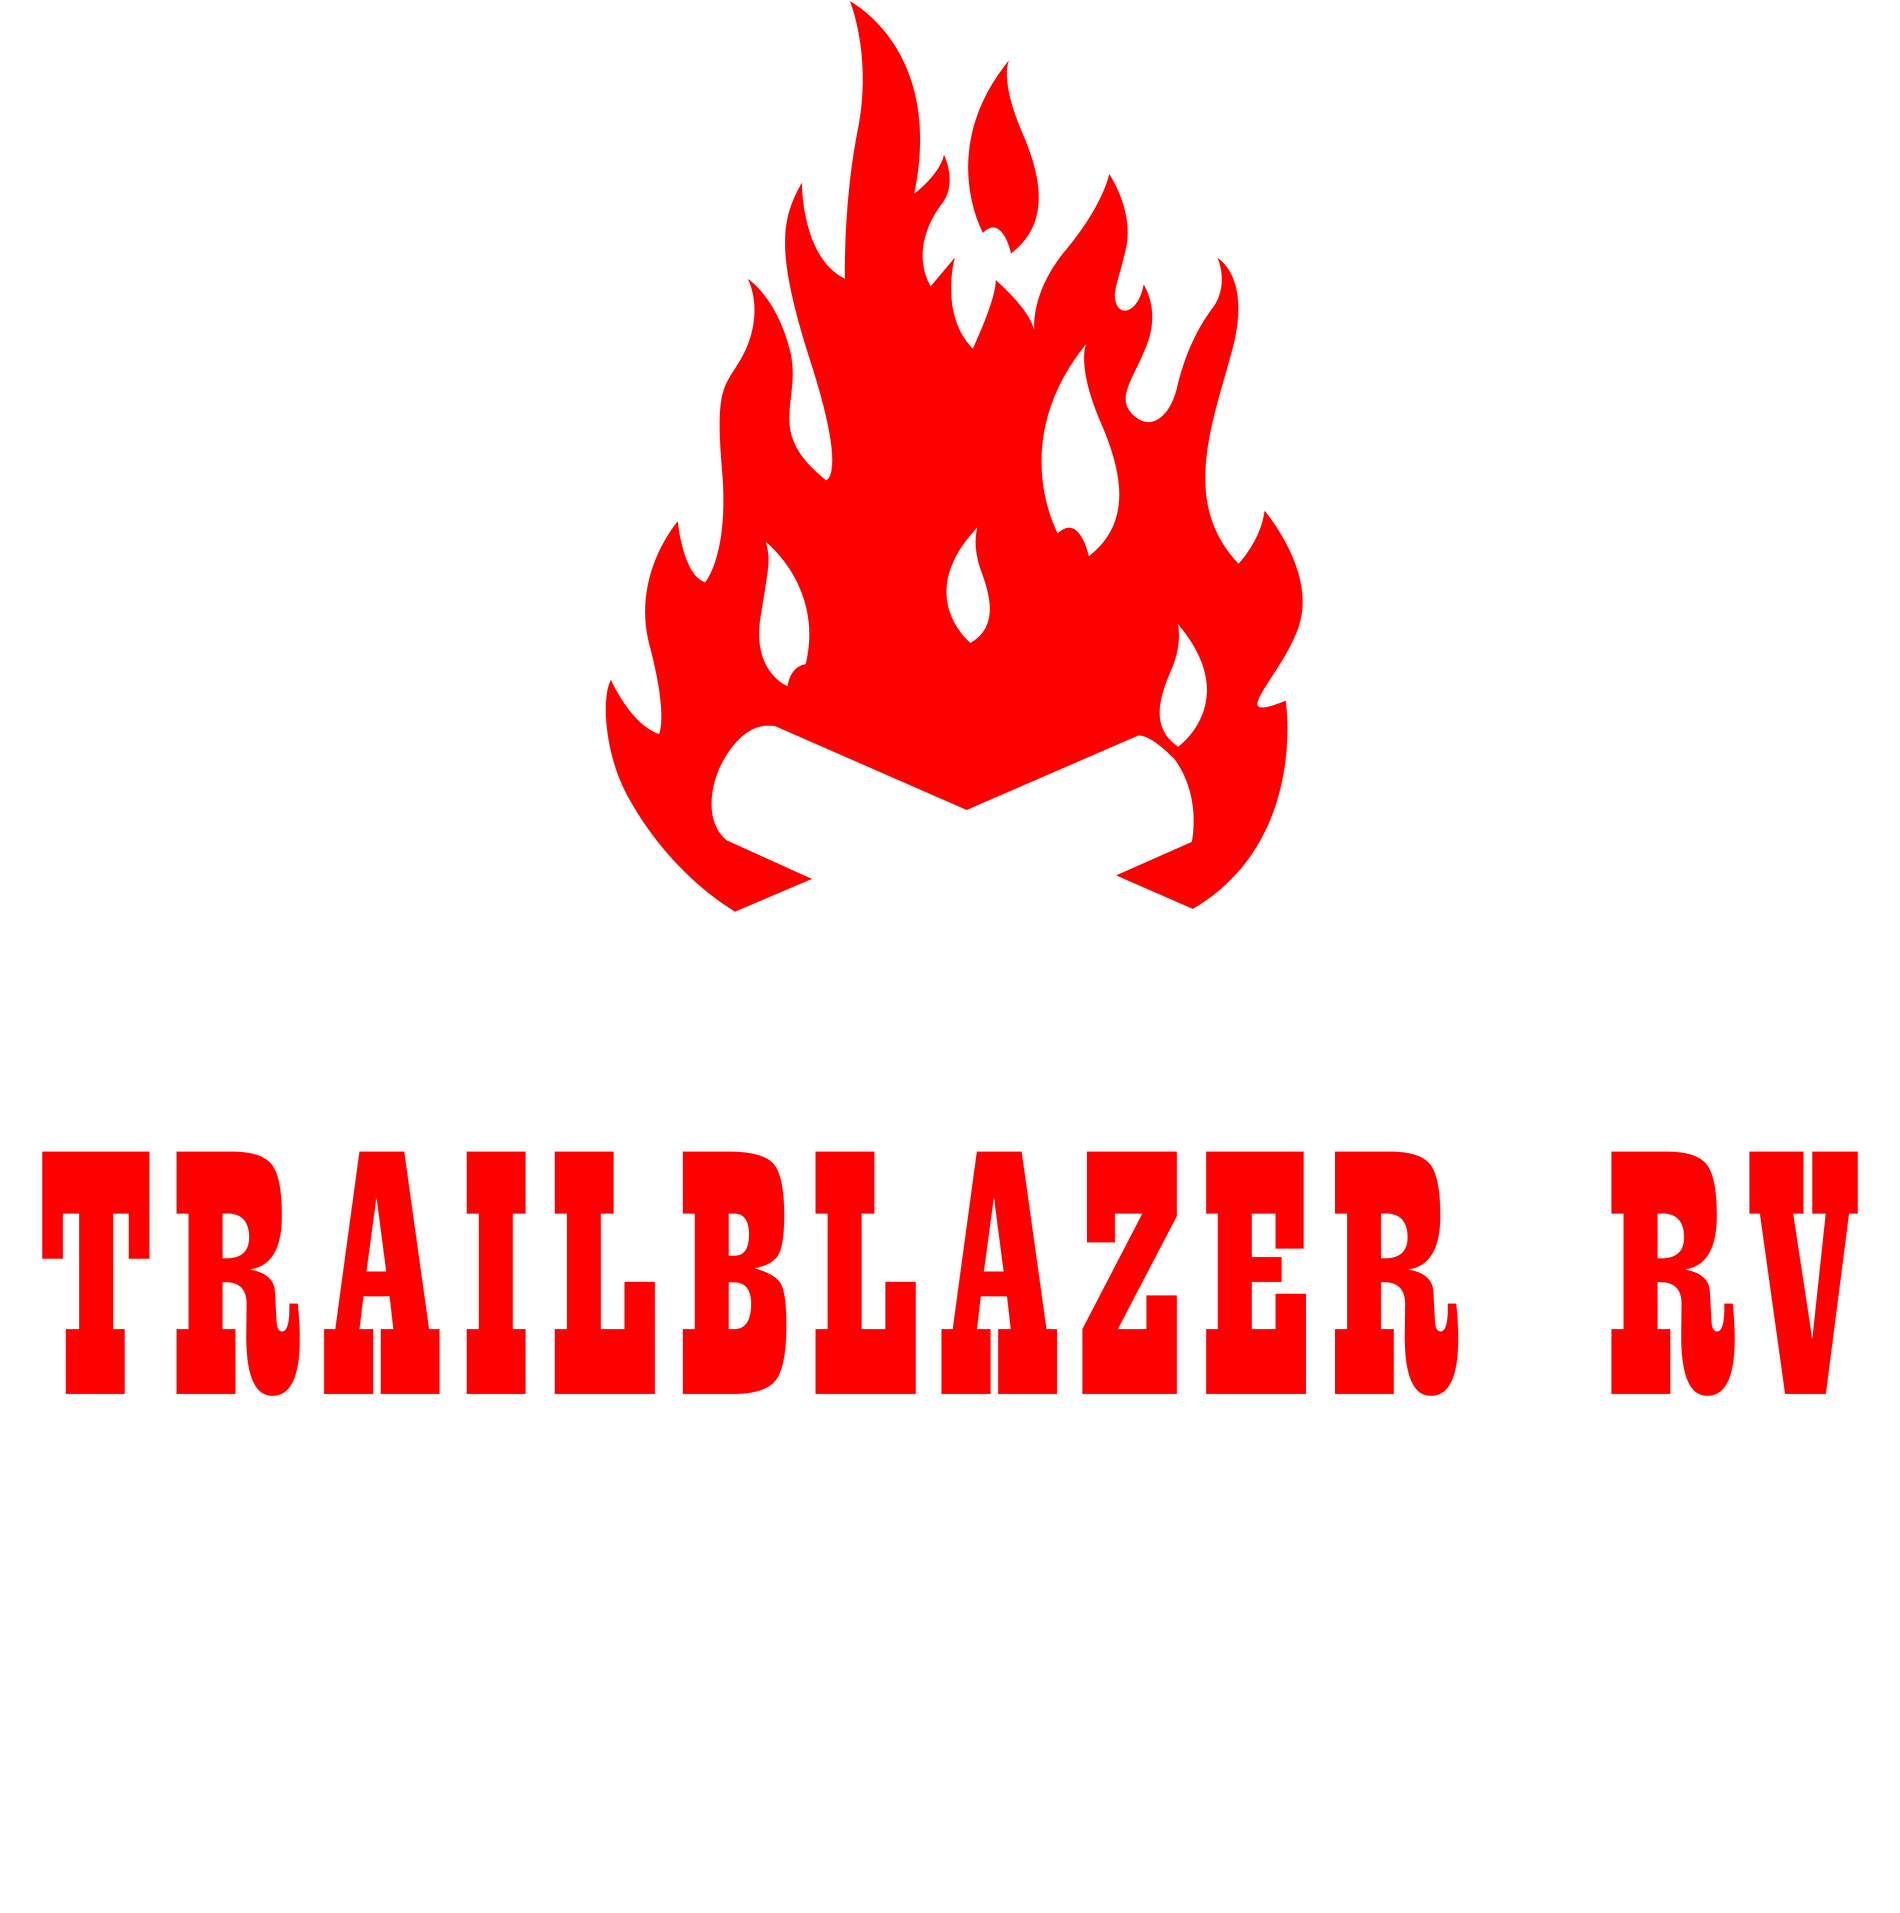 Trailblazer RV